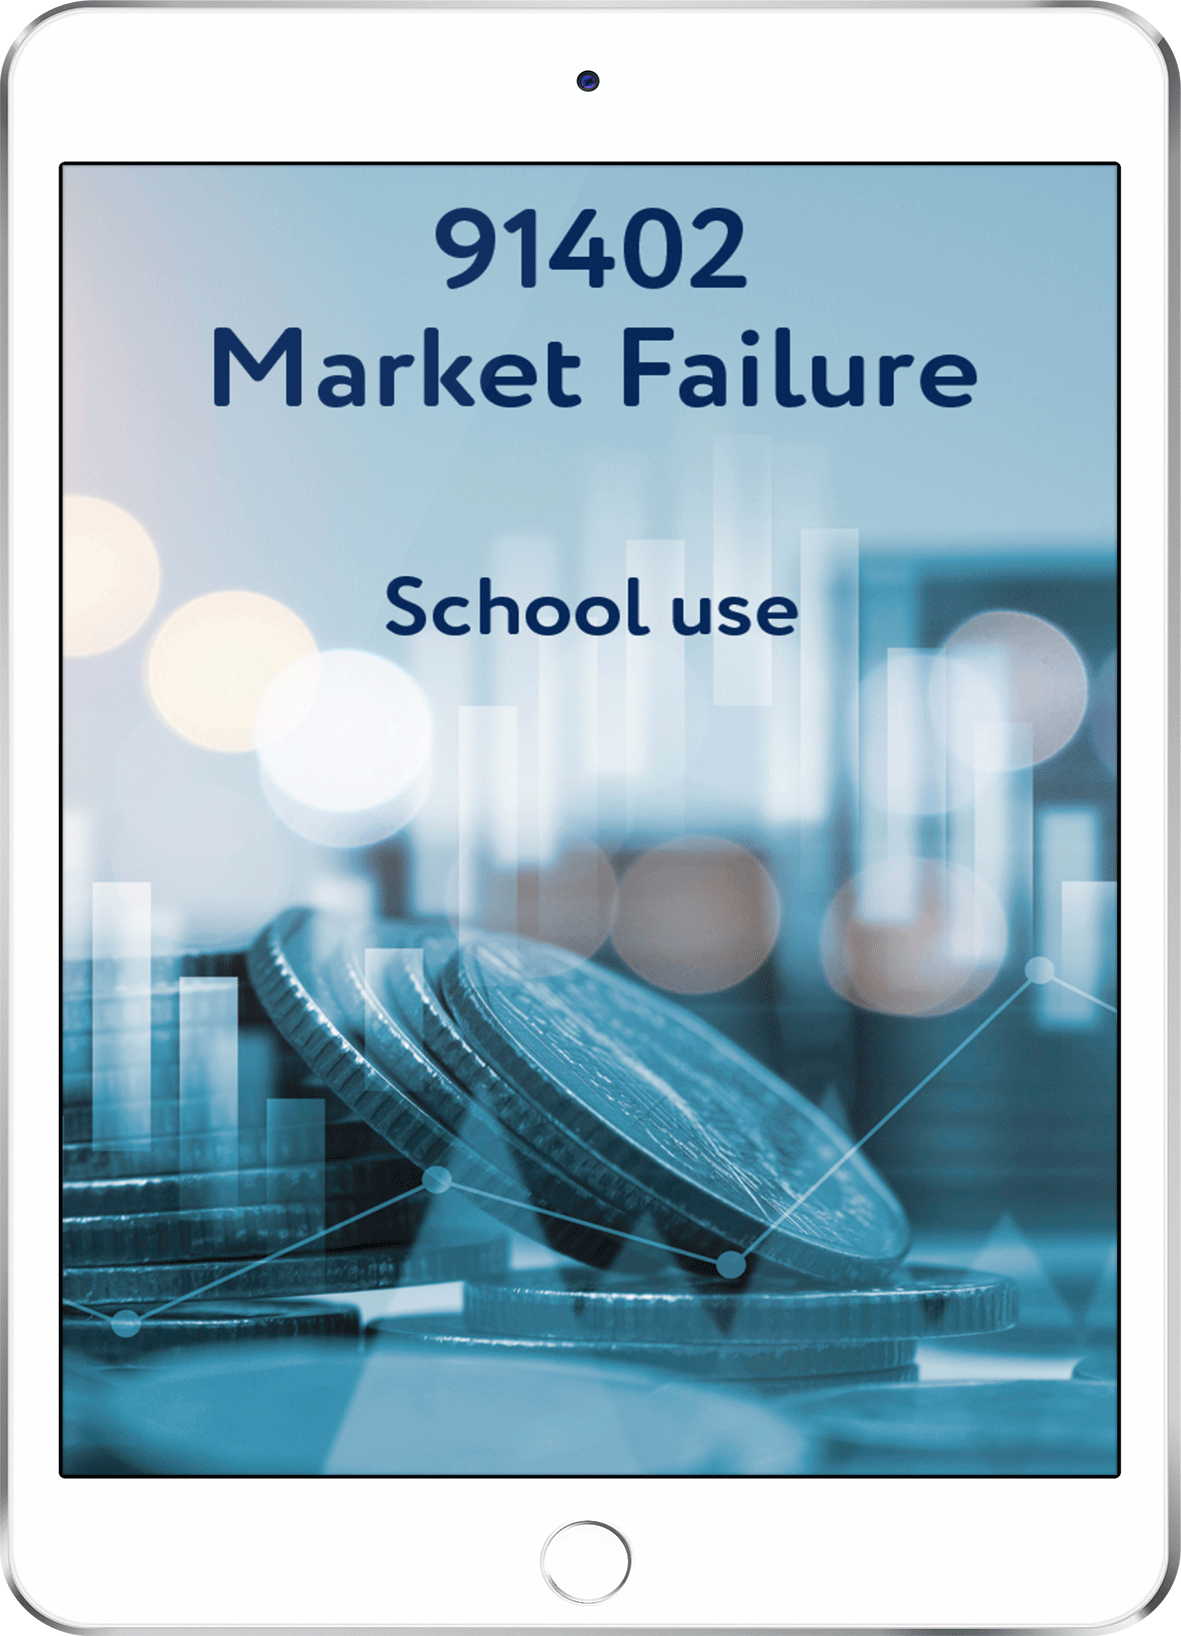 91402 Market Failure - School Use